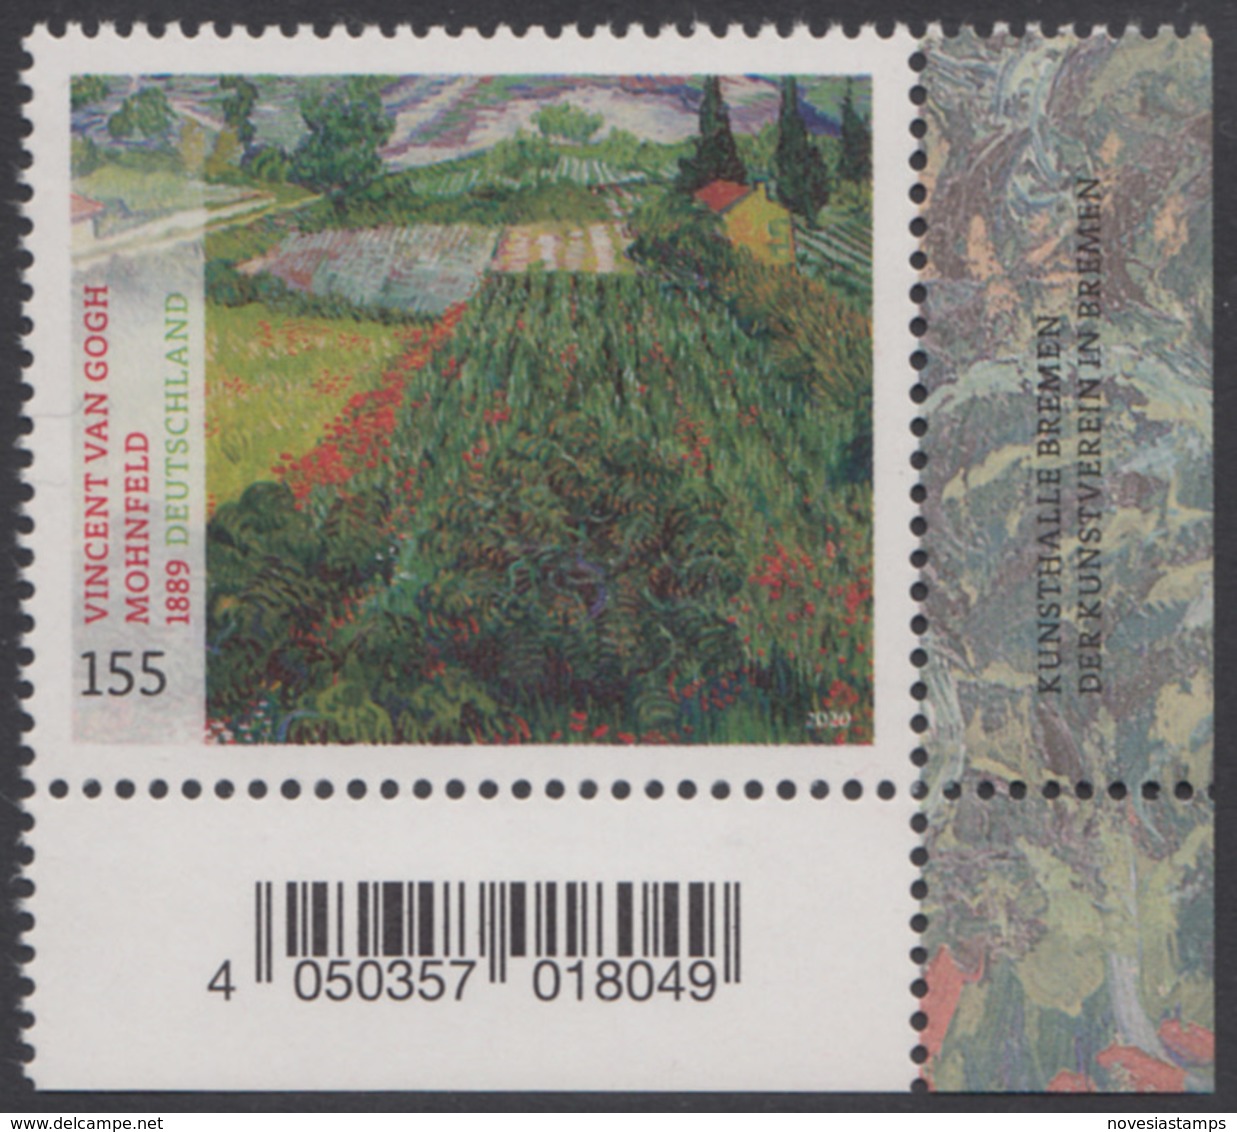 !a! GERMANY 2020 Mi. 3512 MNH SINGLE From Lower Right Corner - Vincent Van Gogh: Poppy Field - Ongebruikt